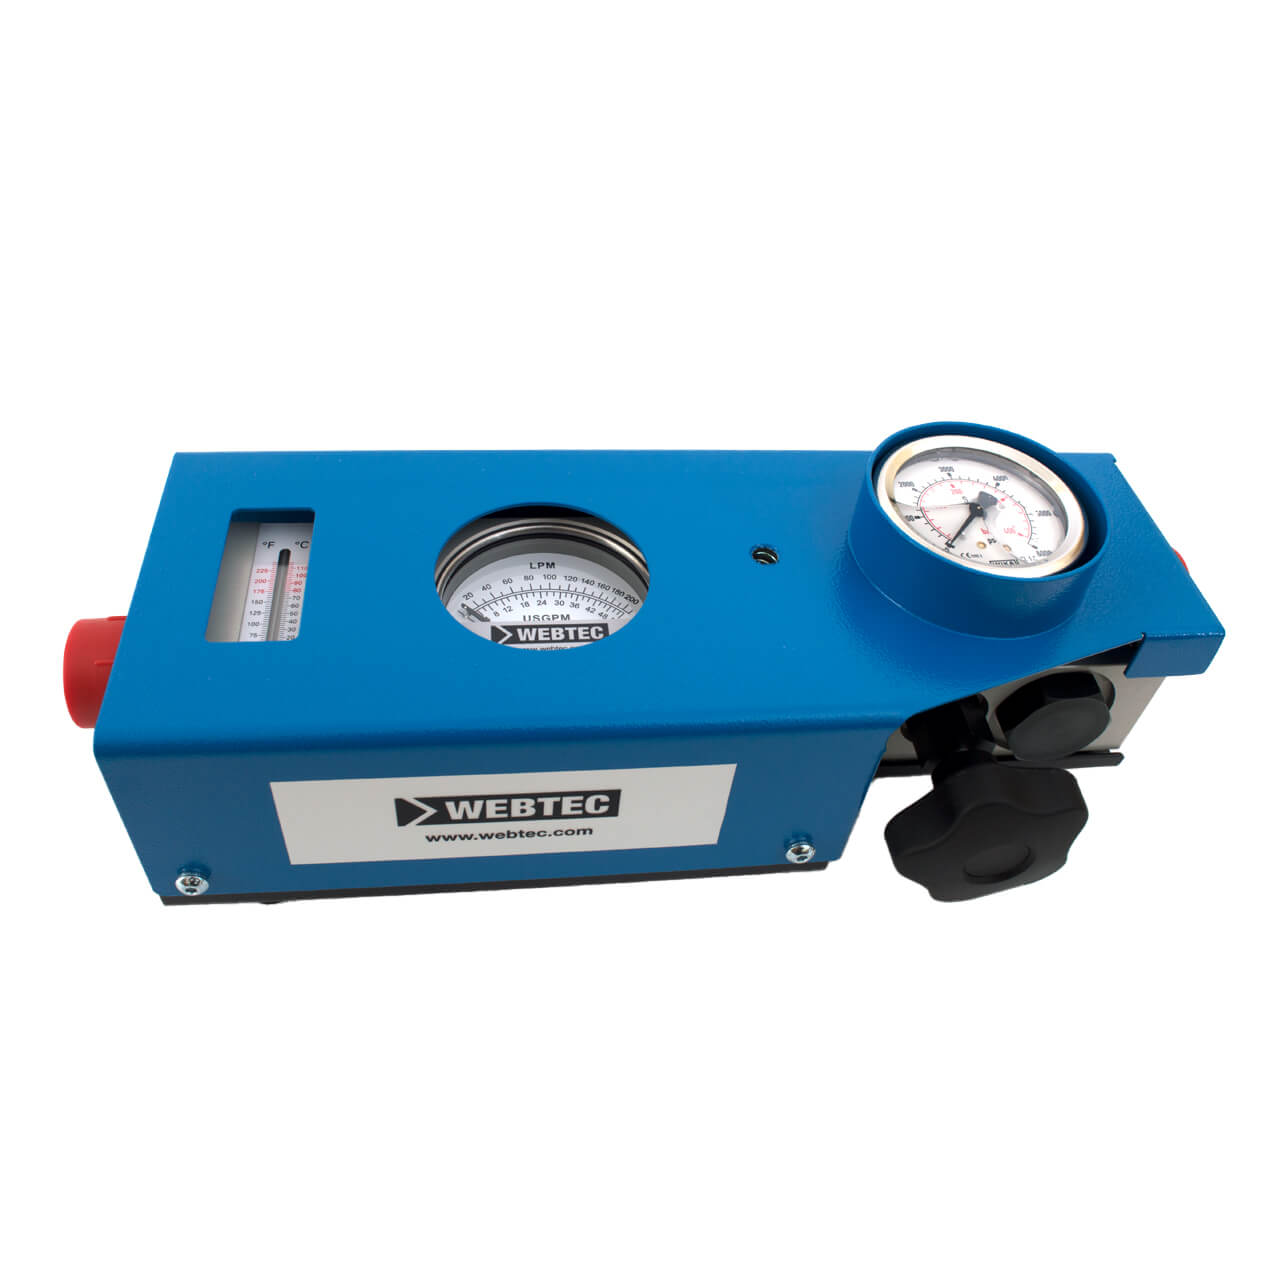 Webtec - Hydraulic measurement and control